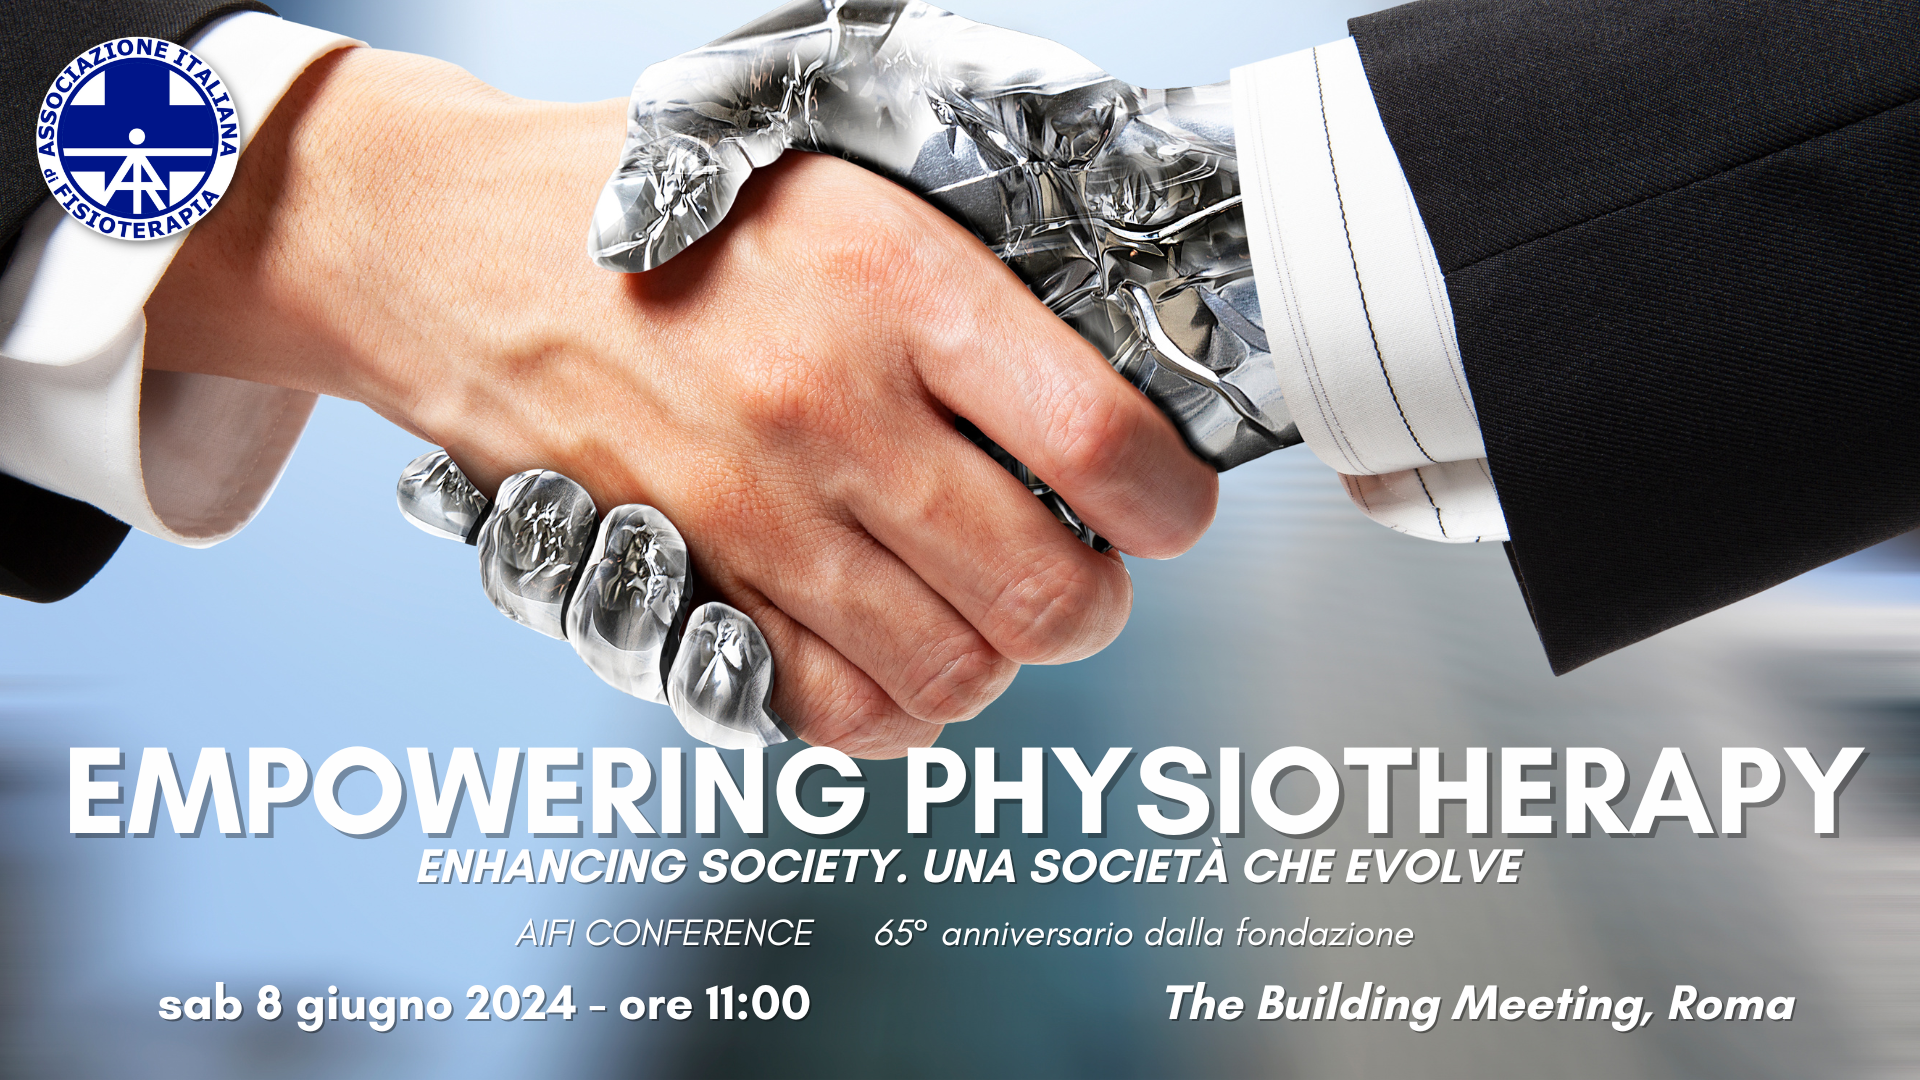 AIFI Conference – Empowering Physiotherapy: enhancing society. Una società che evolve – 8 giugno 2024, Roma